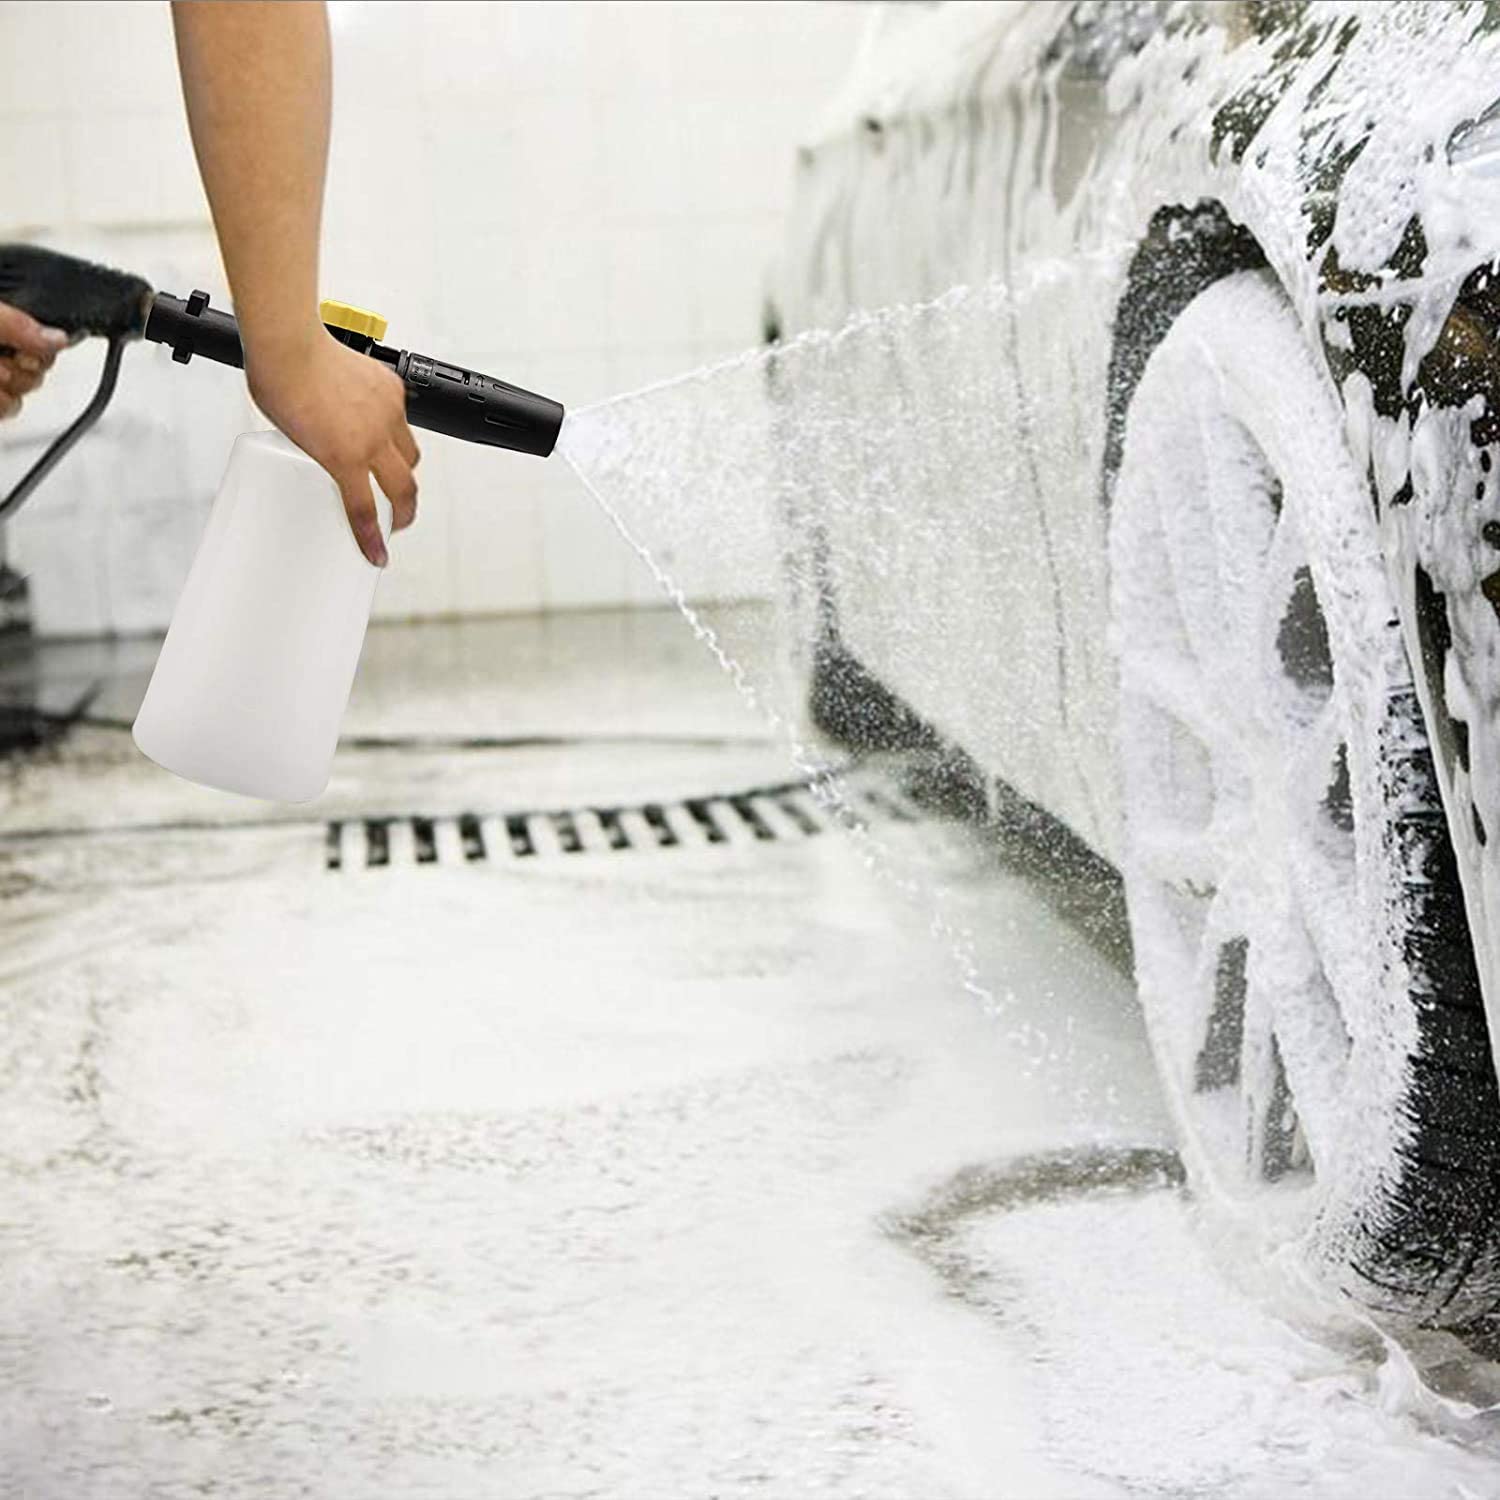 Lancia in schiuma di neve in sapone di alta qualità Lance da 750 ml di rondella a pressione di sapone per lavaggio per lavaggio per lavaggio regolabile getto per lavaggio per lavaggio per auto per lavaggio per auto